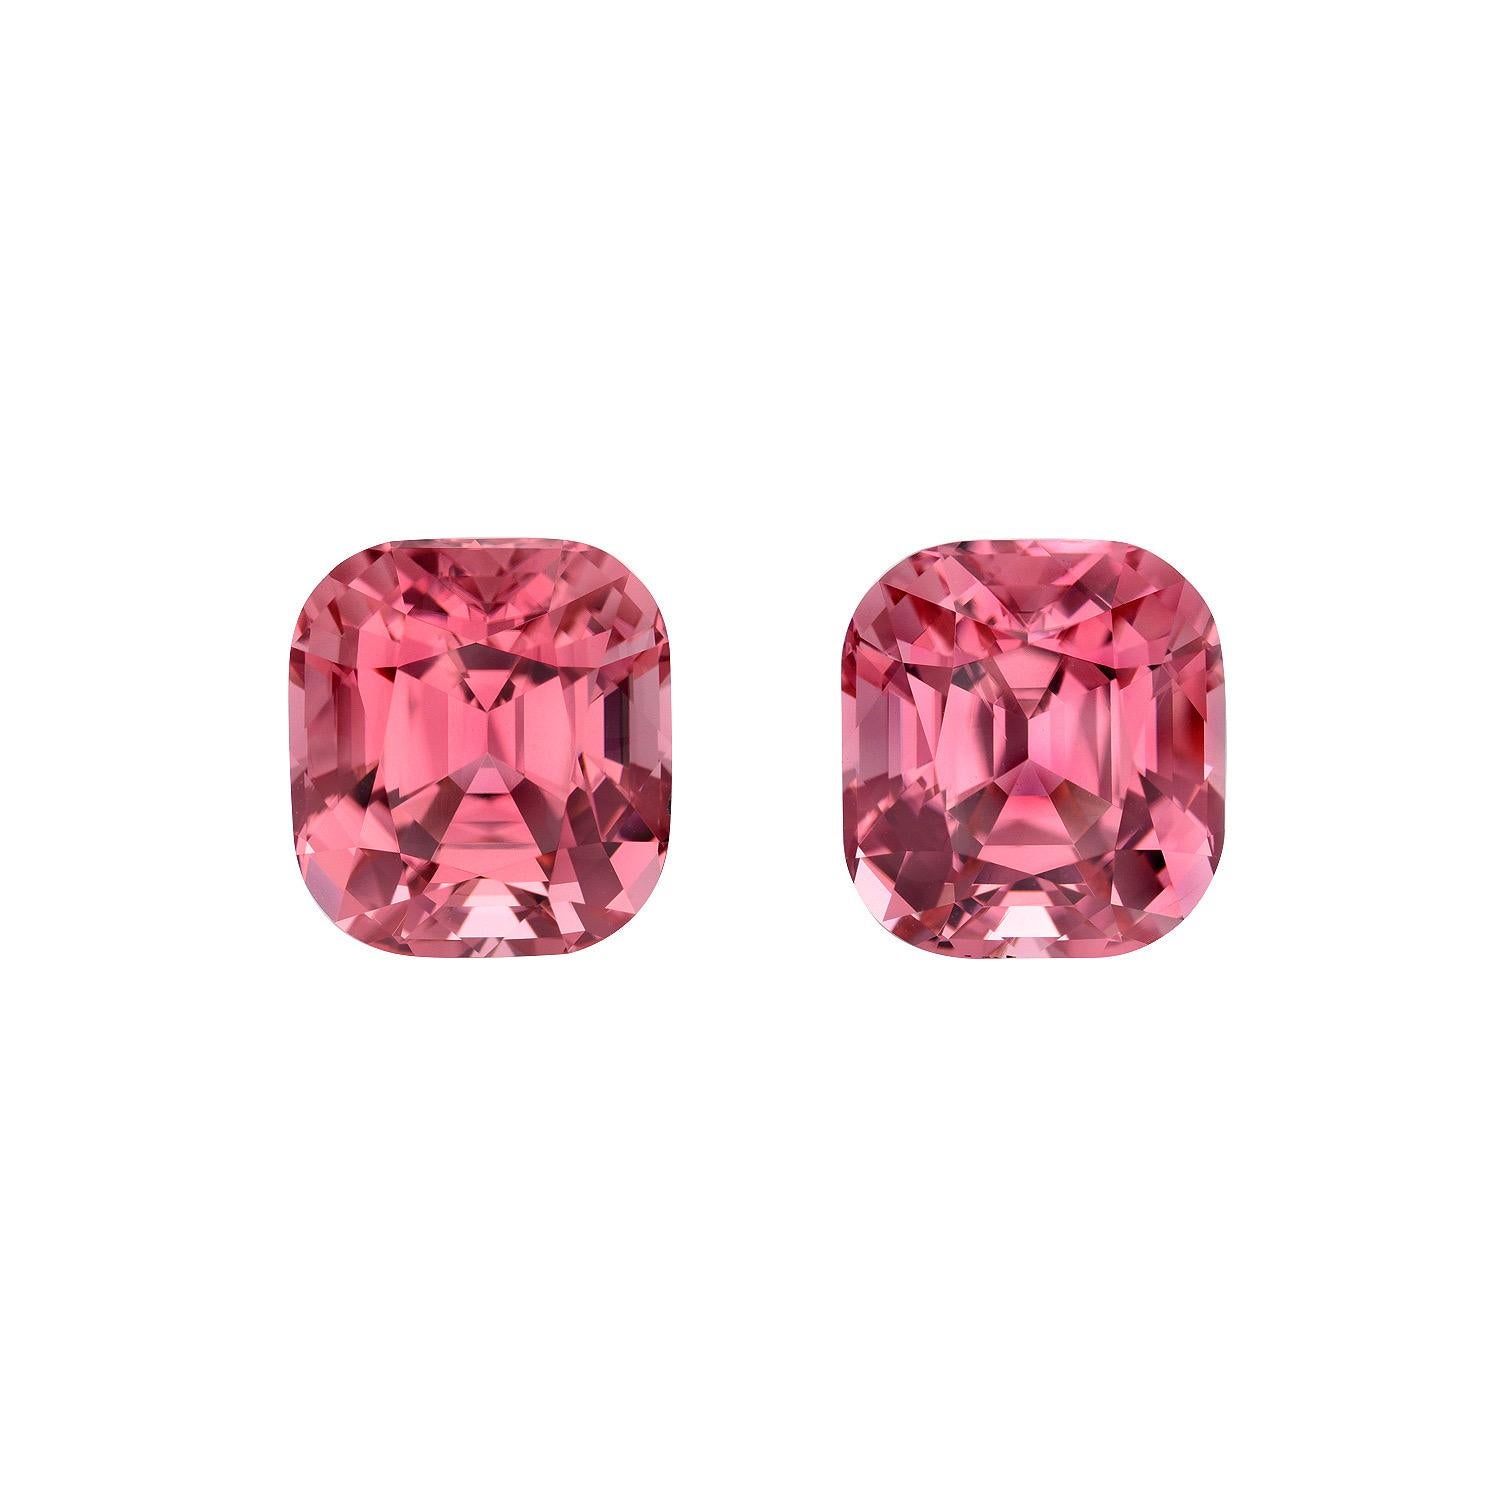 Contemporary Pink Tourmaline Earring Gems 12.65 Carat Cushion Loose Gemstones